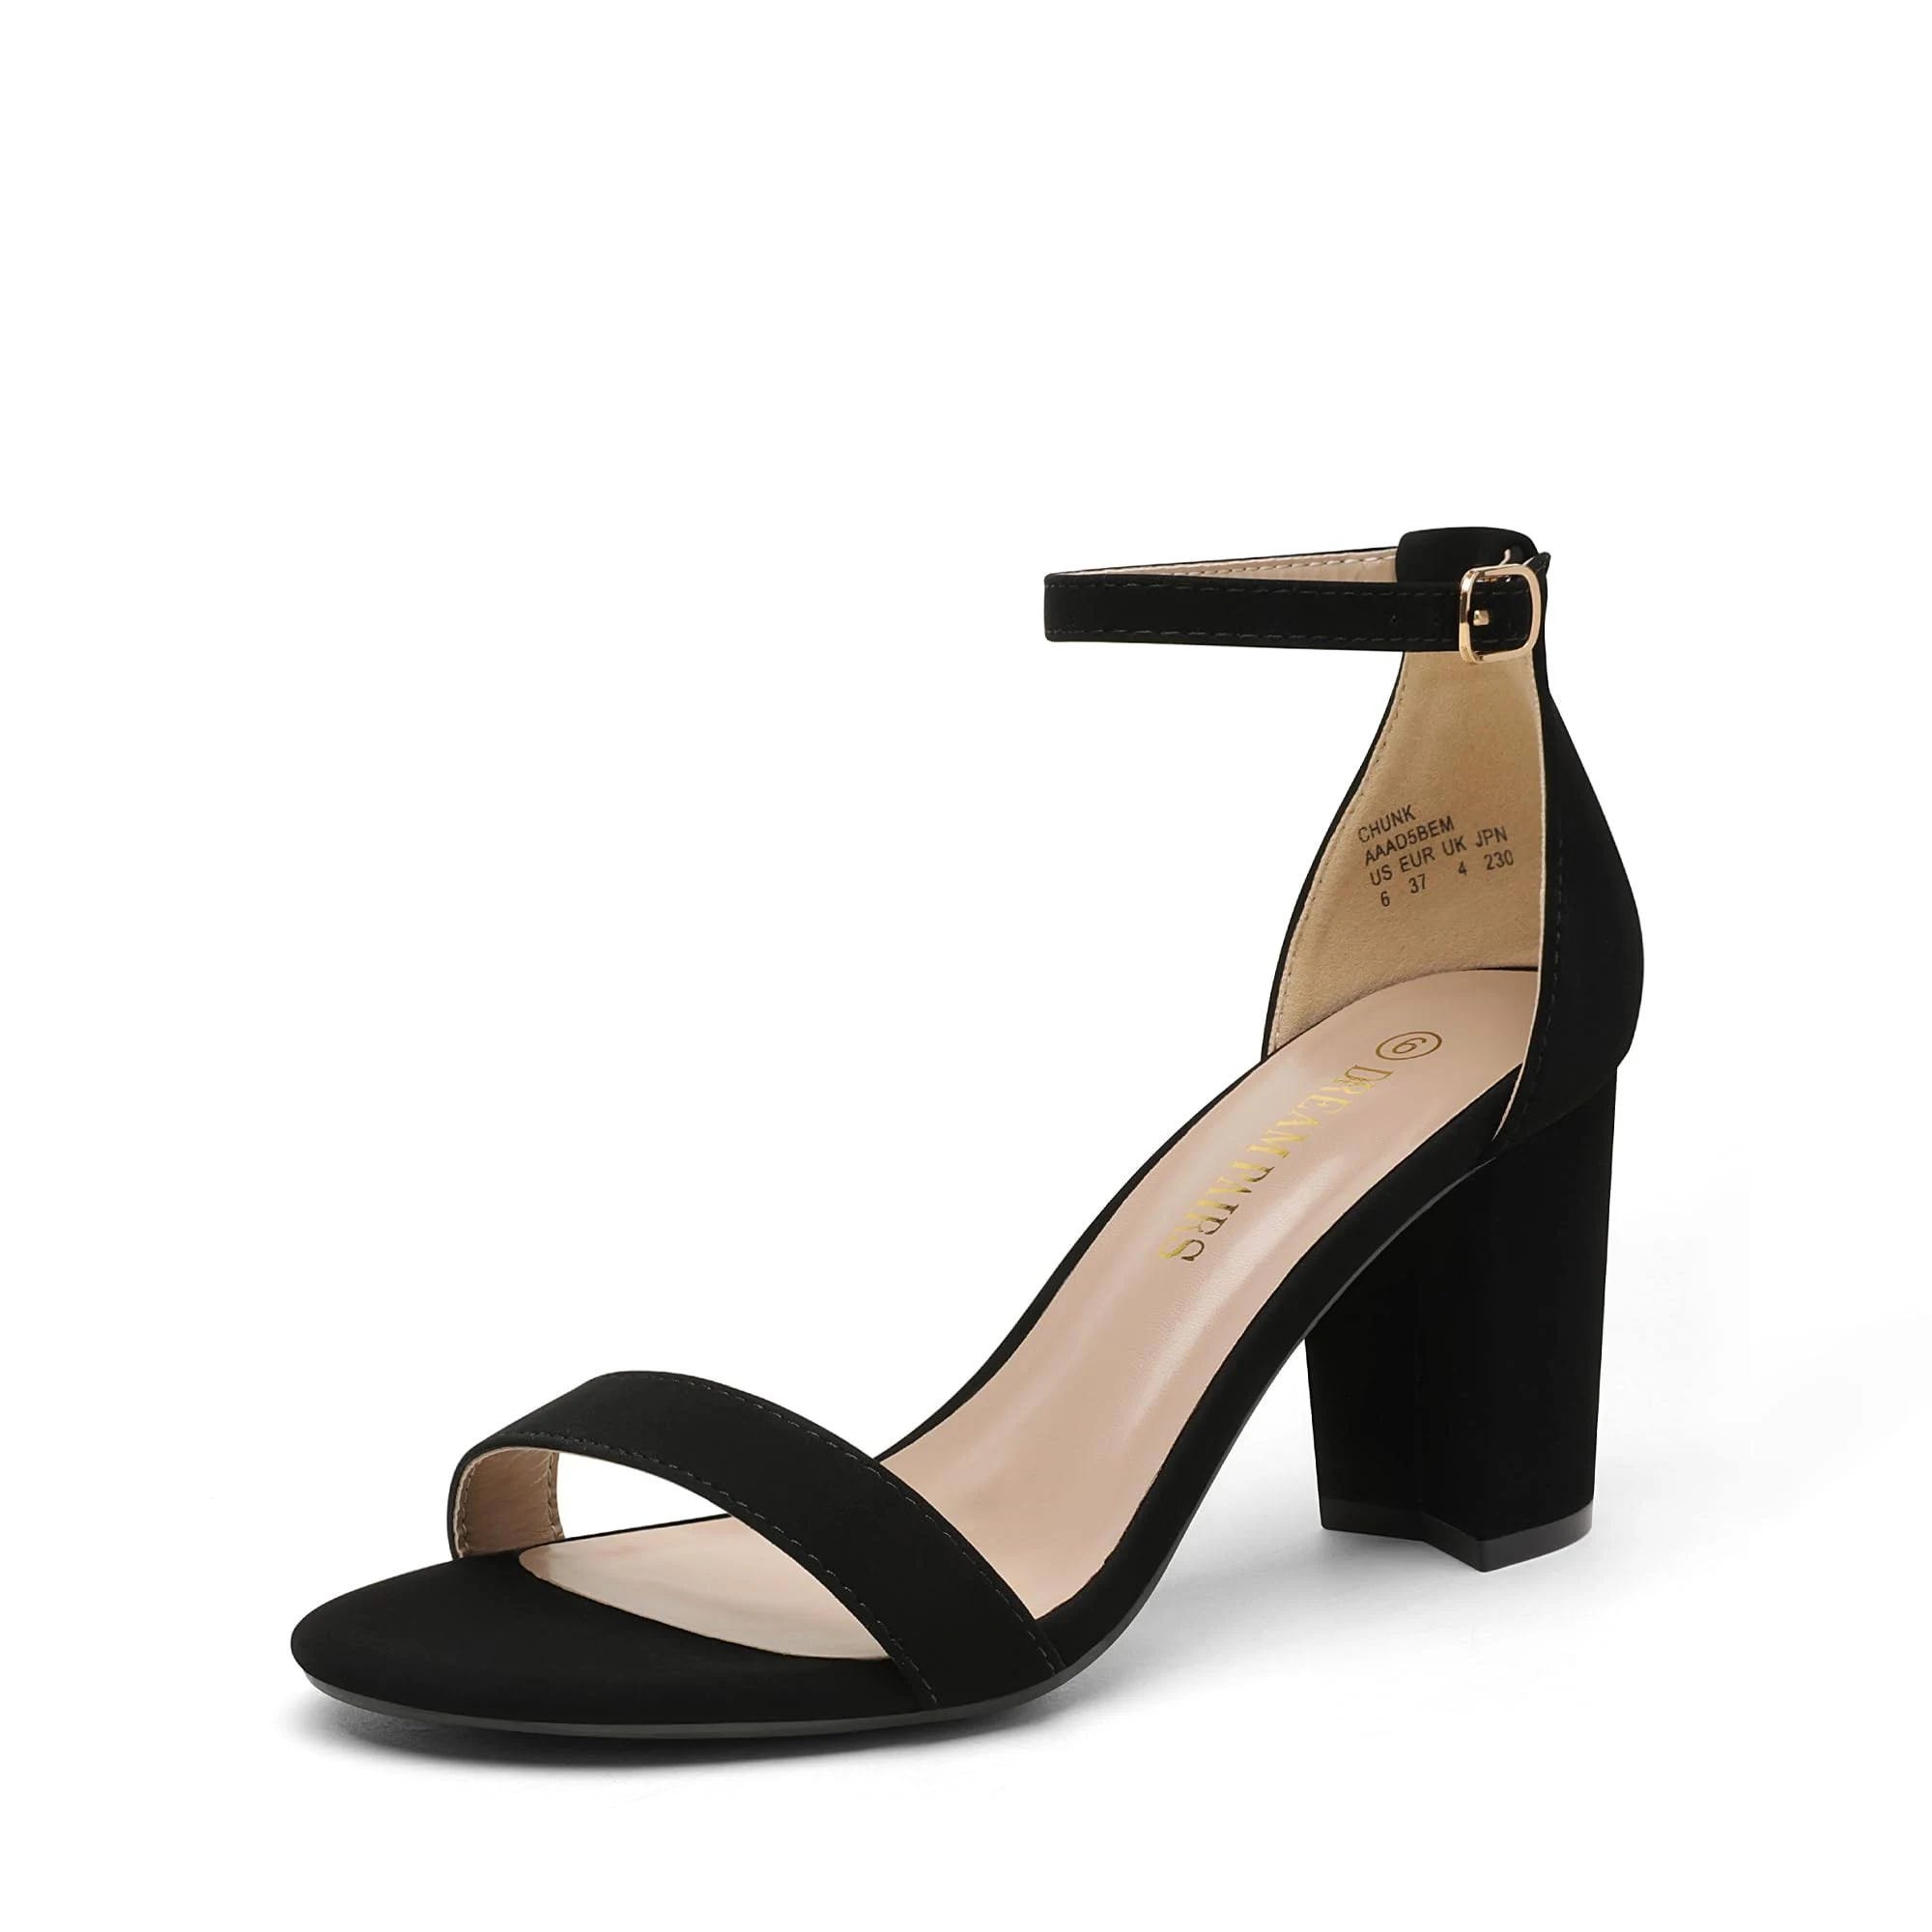 Fashionable Black Heeled Sandals with Adjustable Ankle Strap | Image